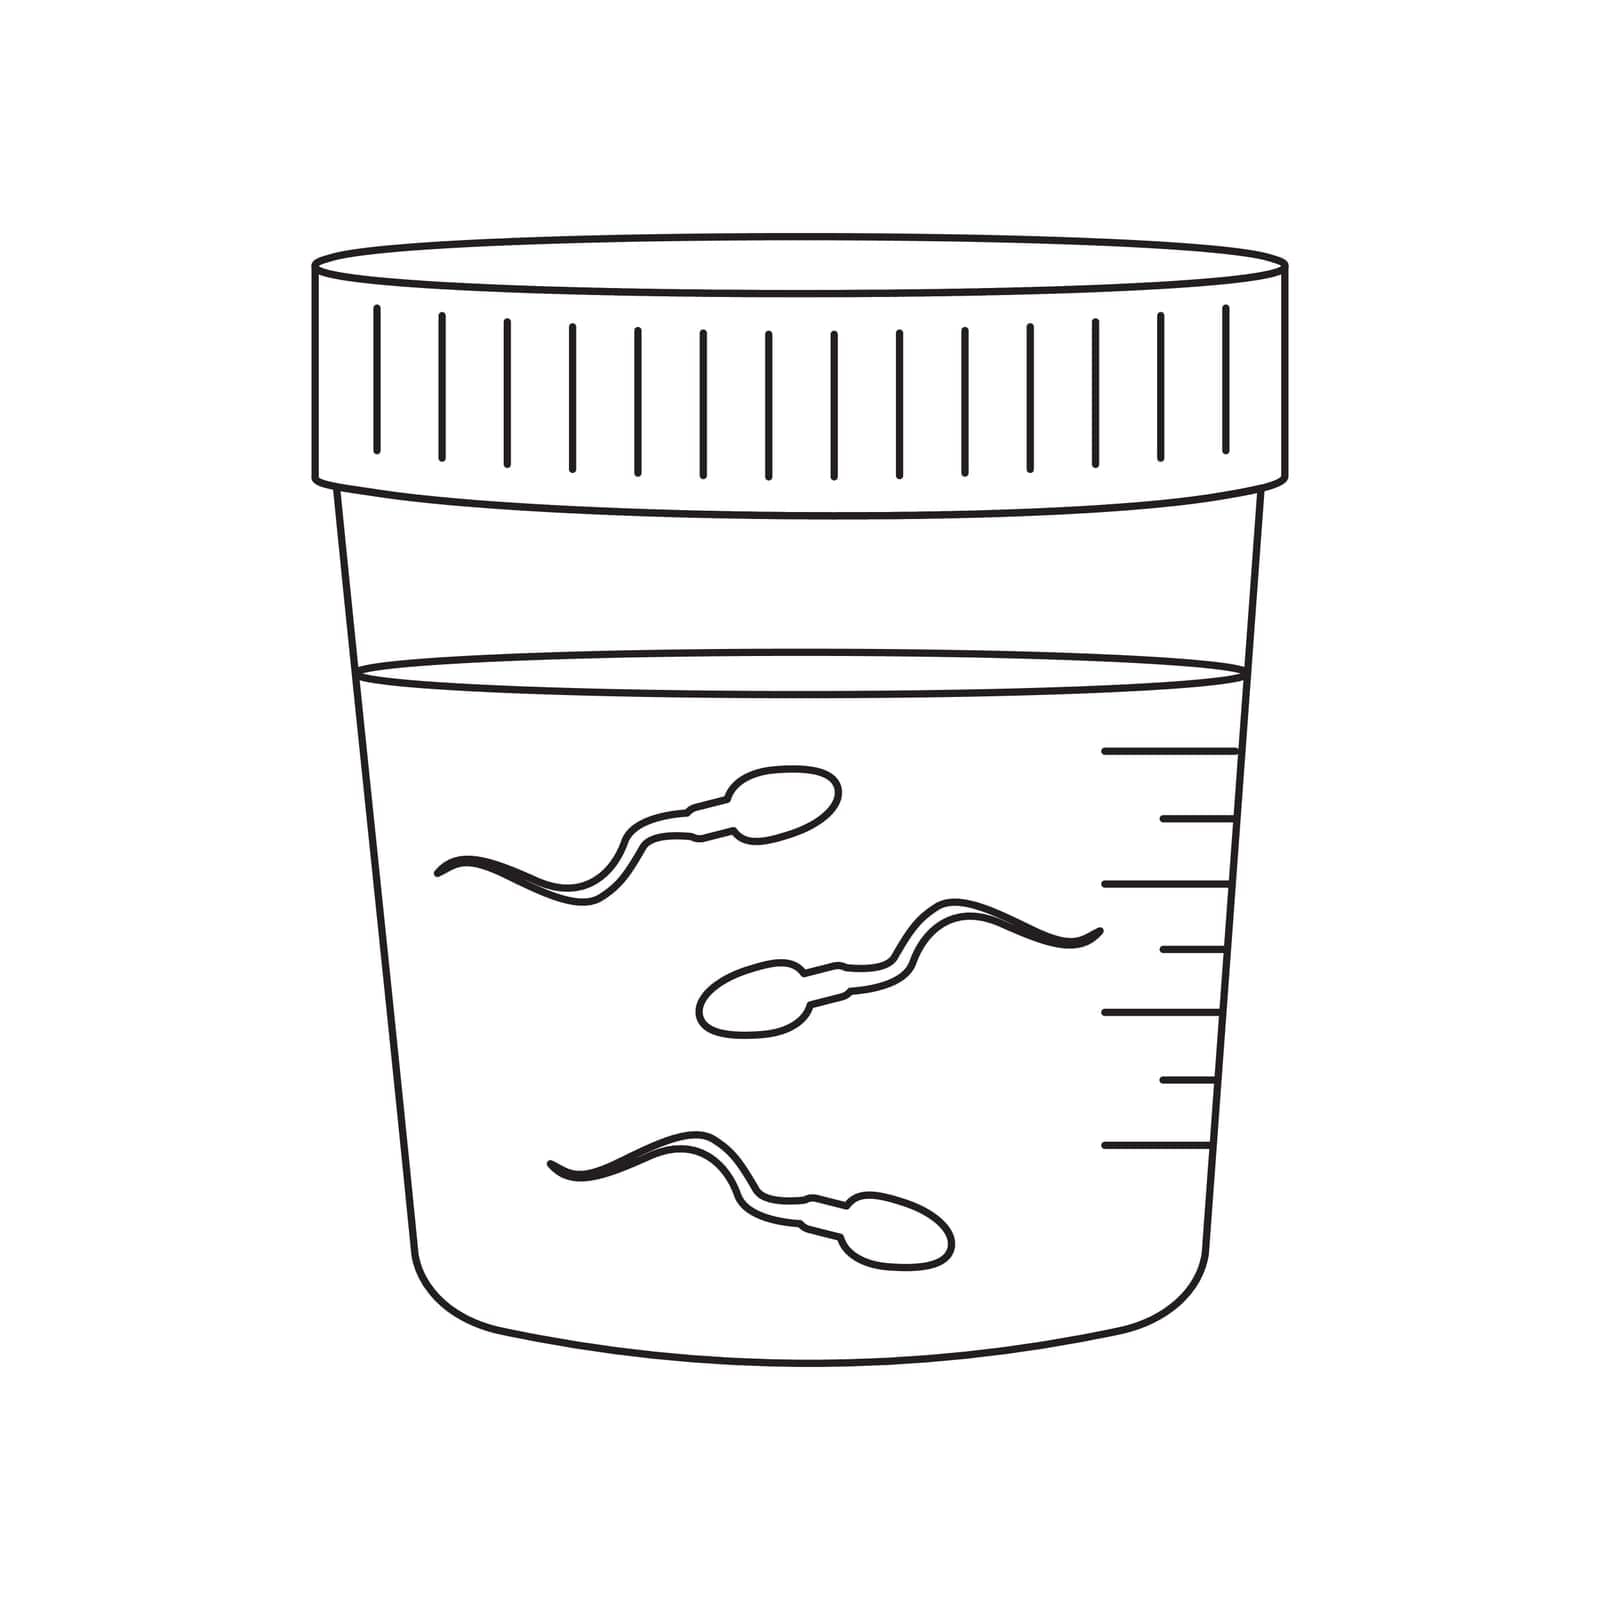 Semen analysis outline icon. Sperm sample in plastic container. Male fertility test. Sperm donation concept. Editable stroke. Vector linear illustration.